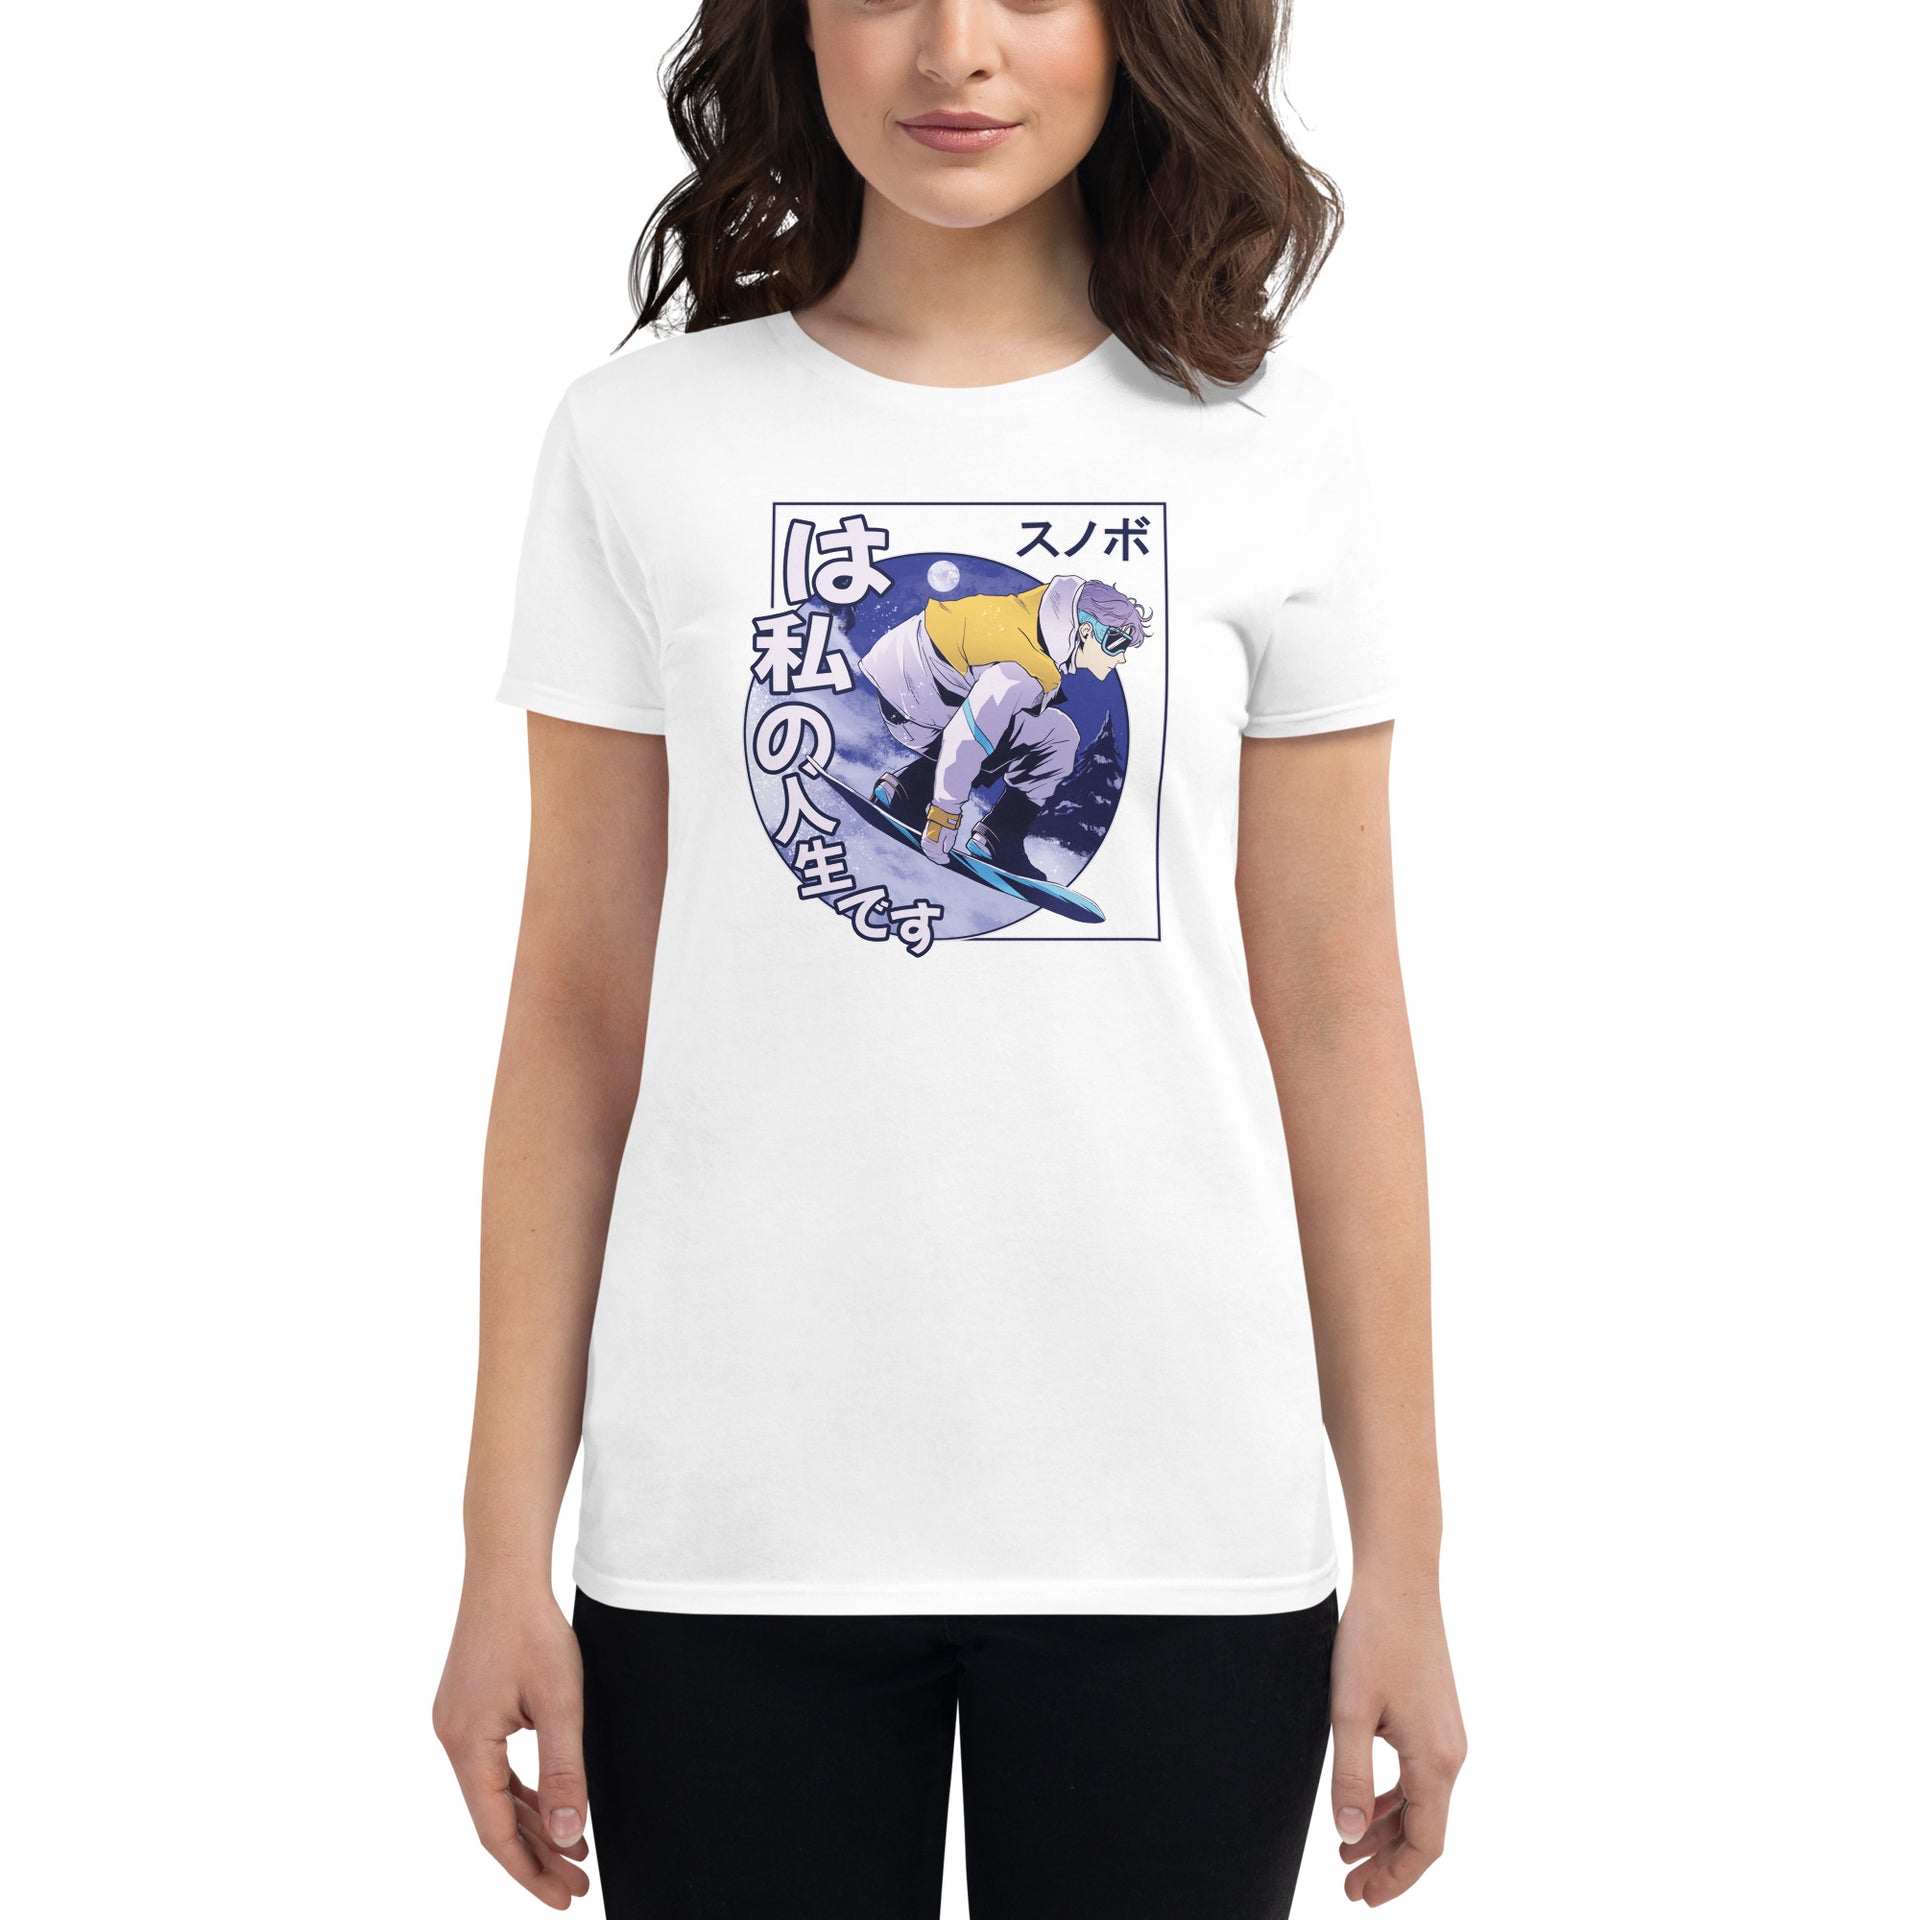 Retro Anime Snowboarder Women's T-Shirt